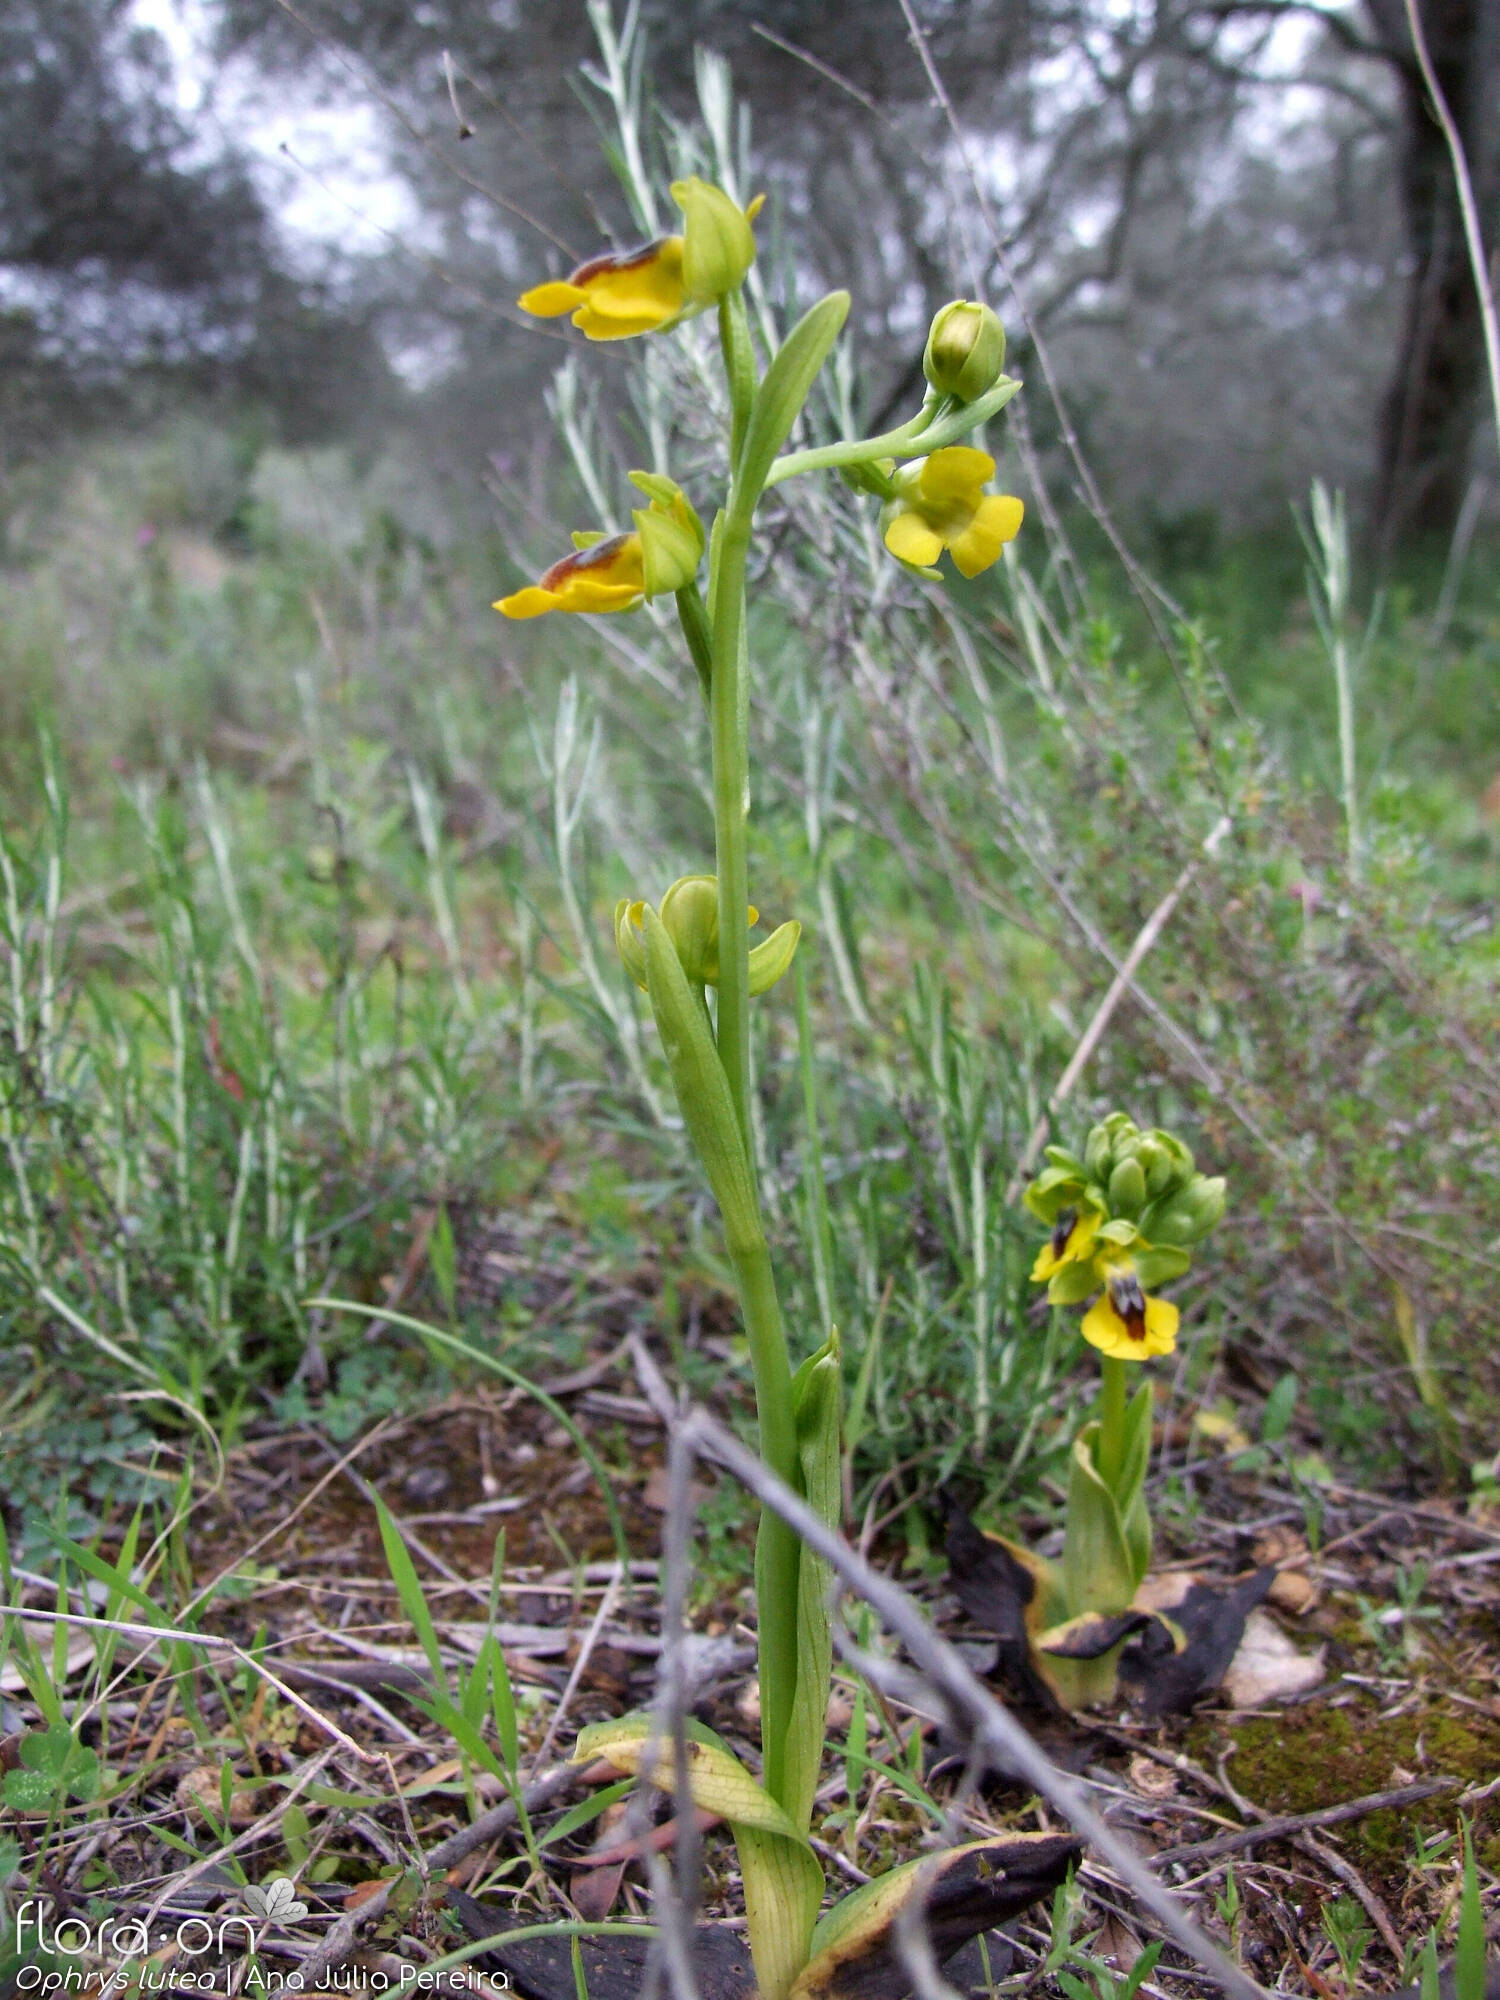 Ophrys lutea - Hábito | Ana Júlia Pereira; CC BY-NC 4.0